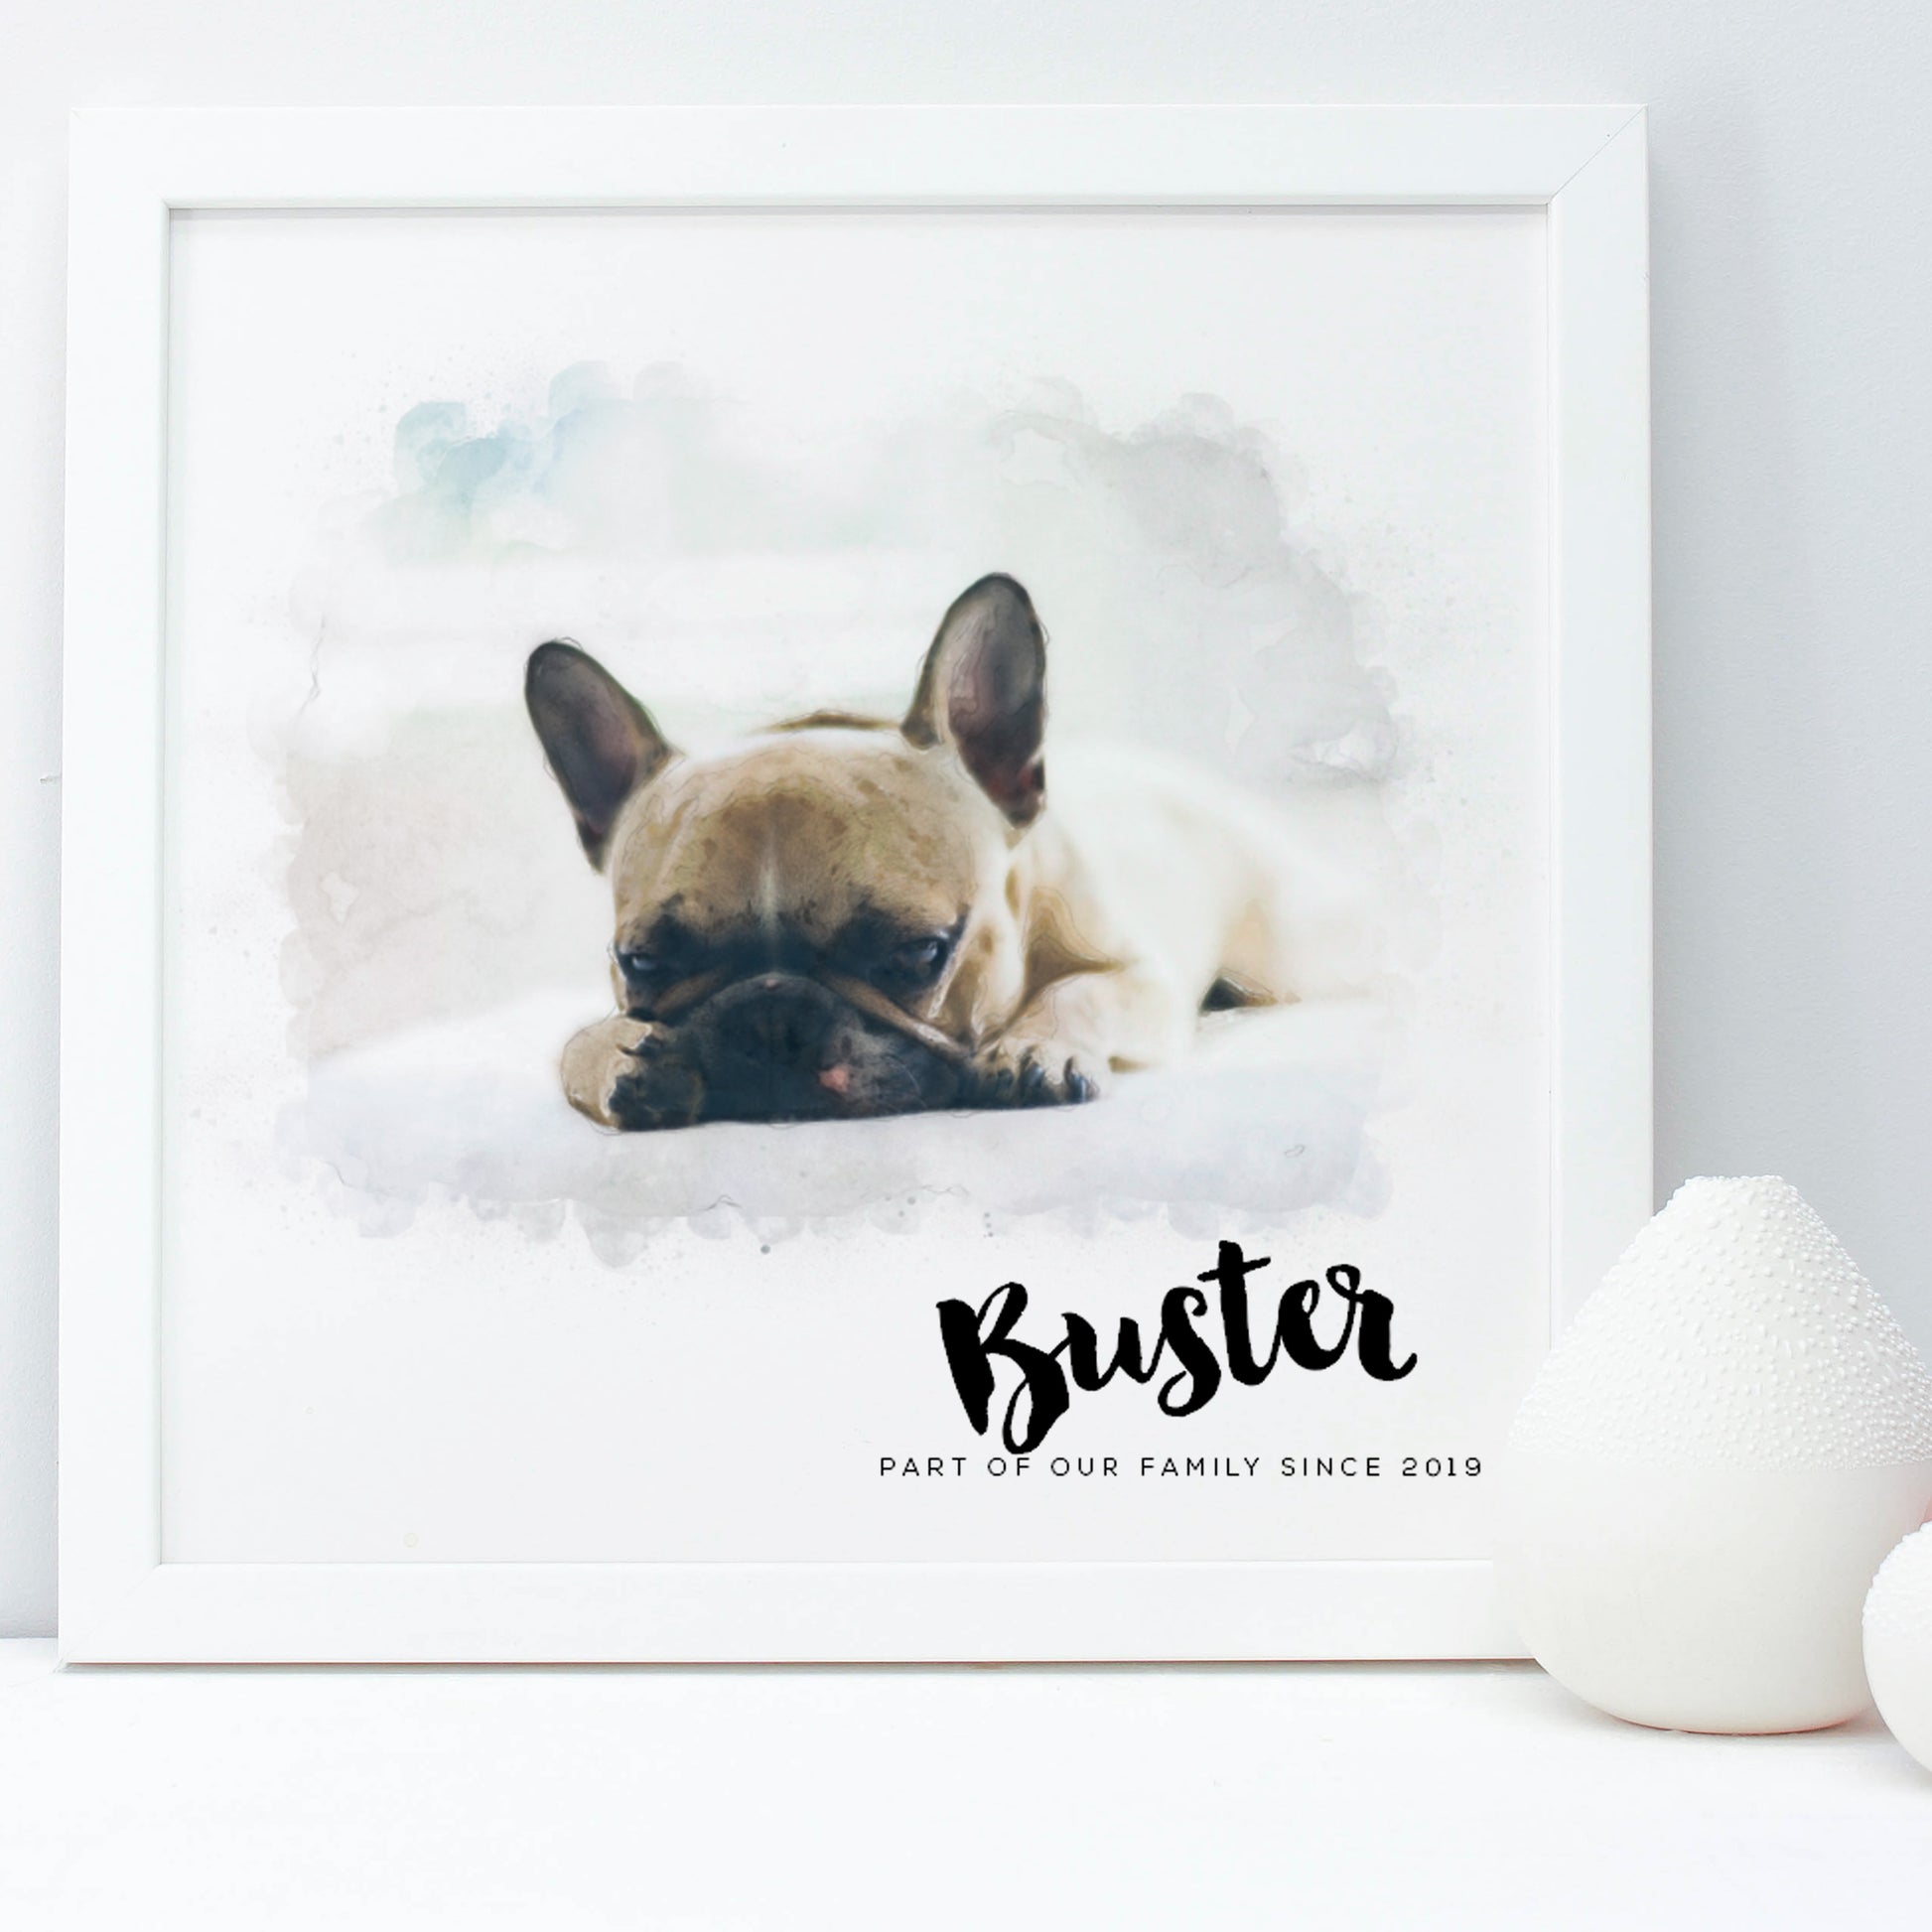 French Bulldog portrait in a white frame